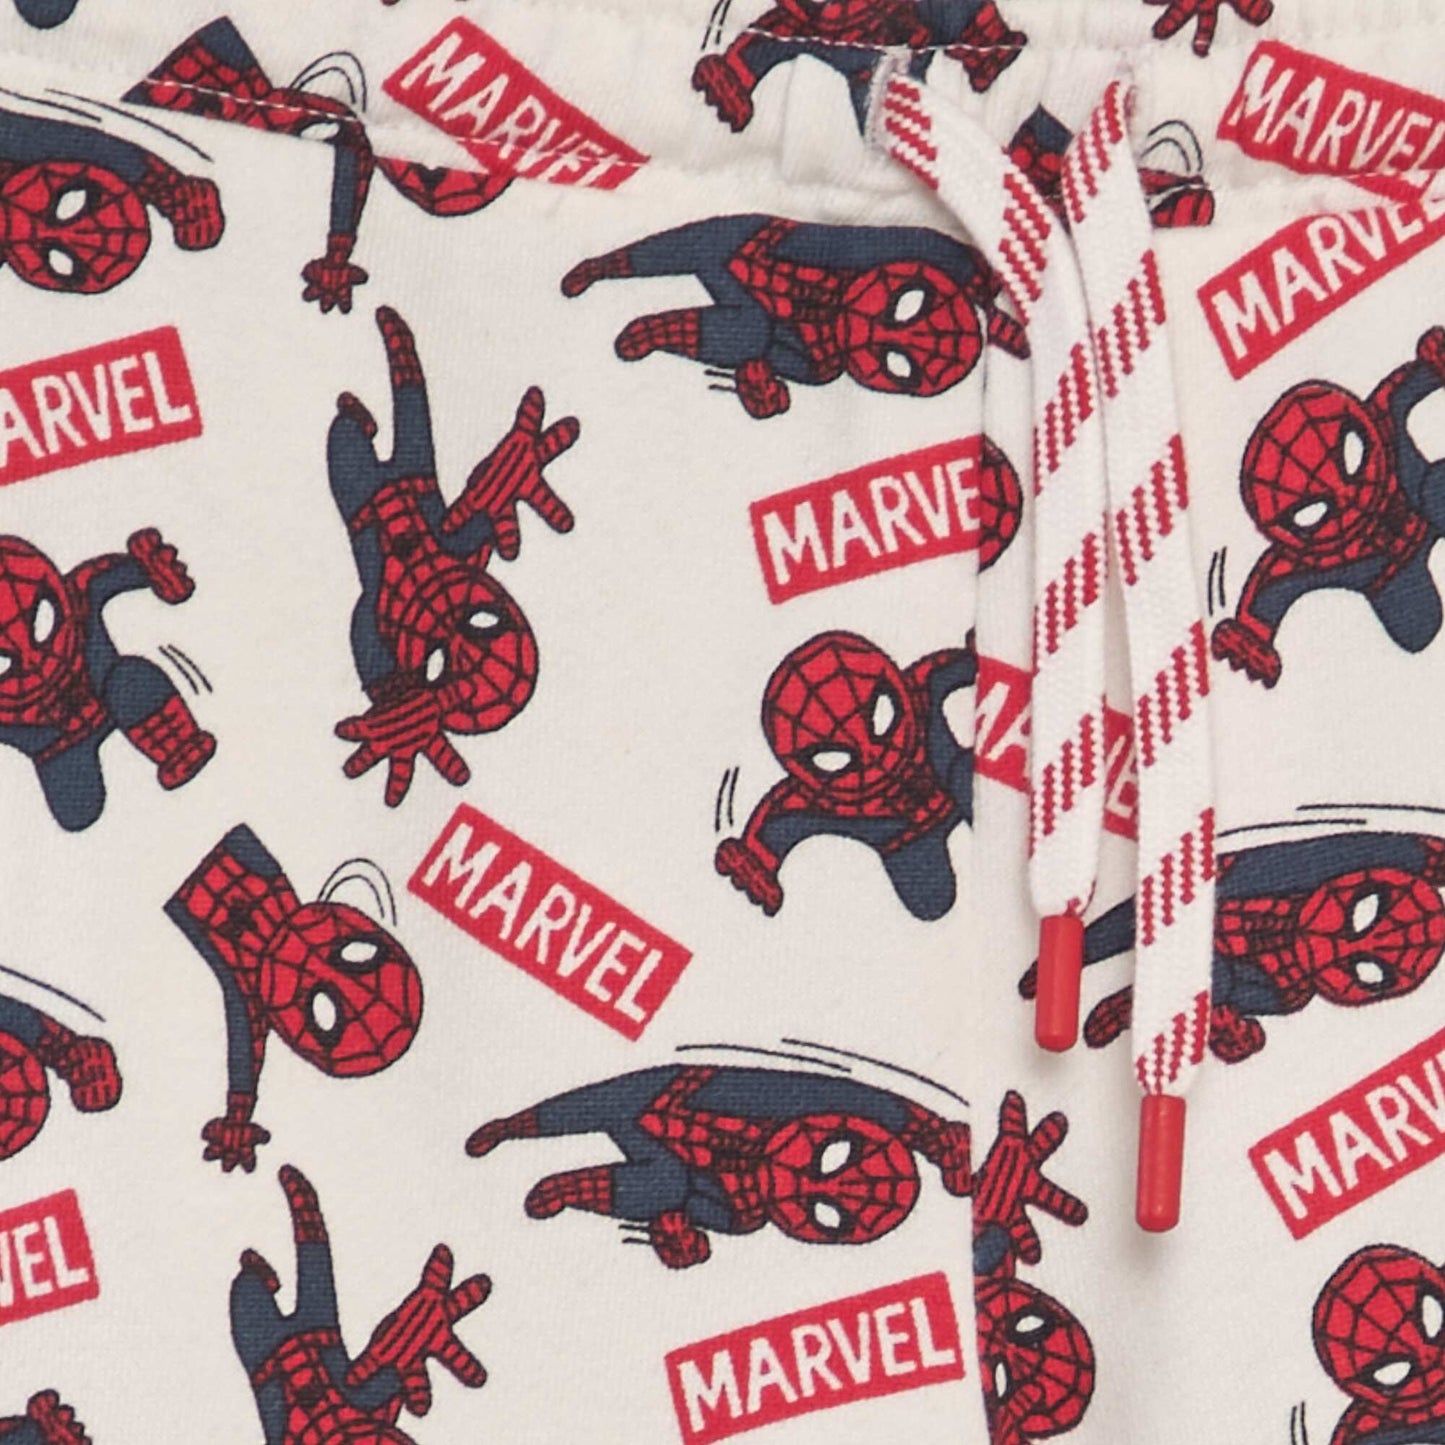 Marvel Spider-Man sweatshirt and joggers set - 2-piece set WHITE